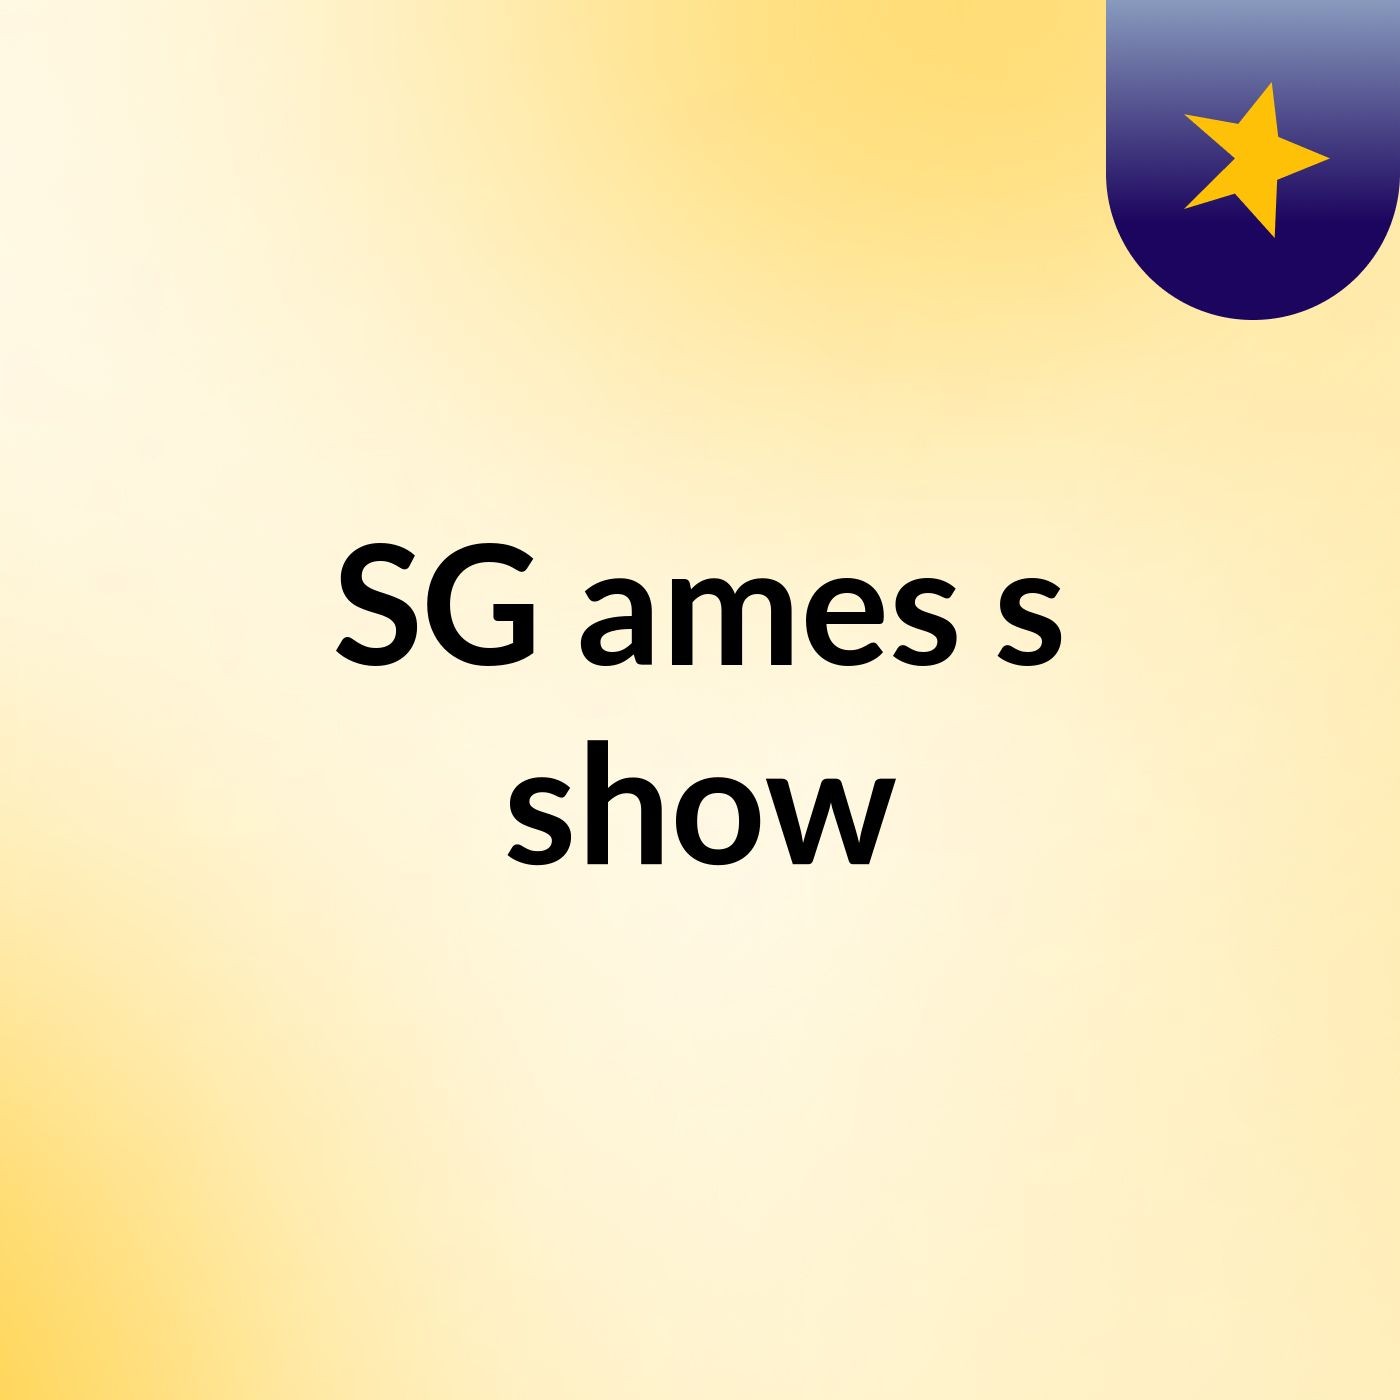 SG ames's show